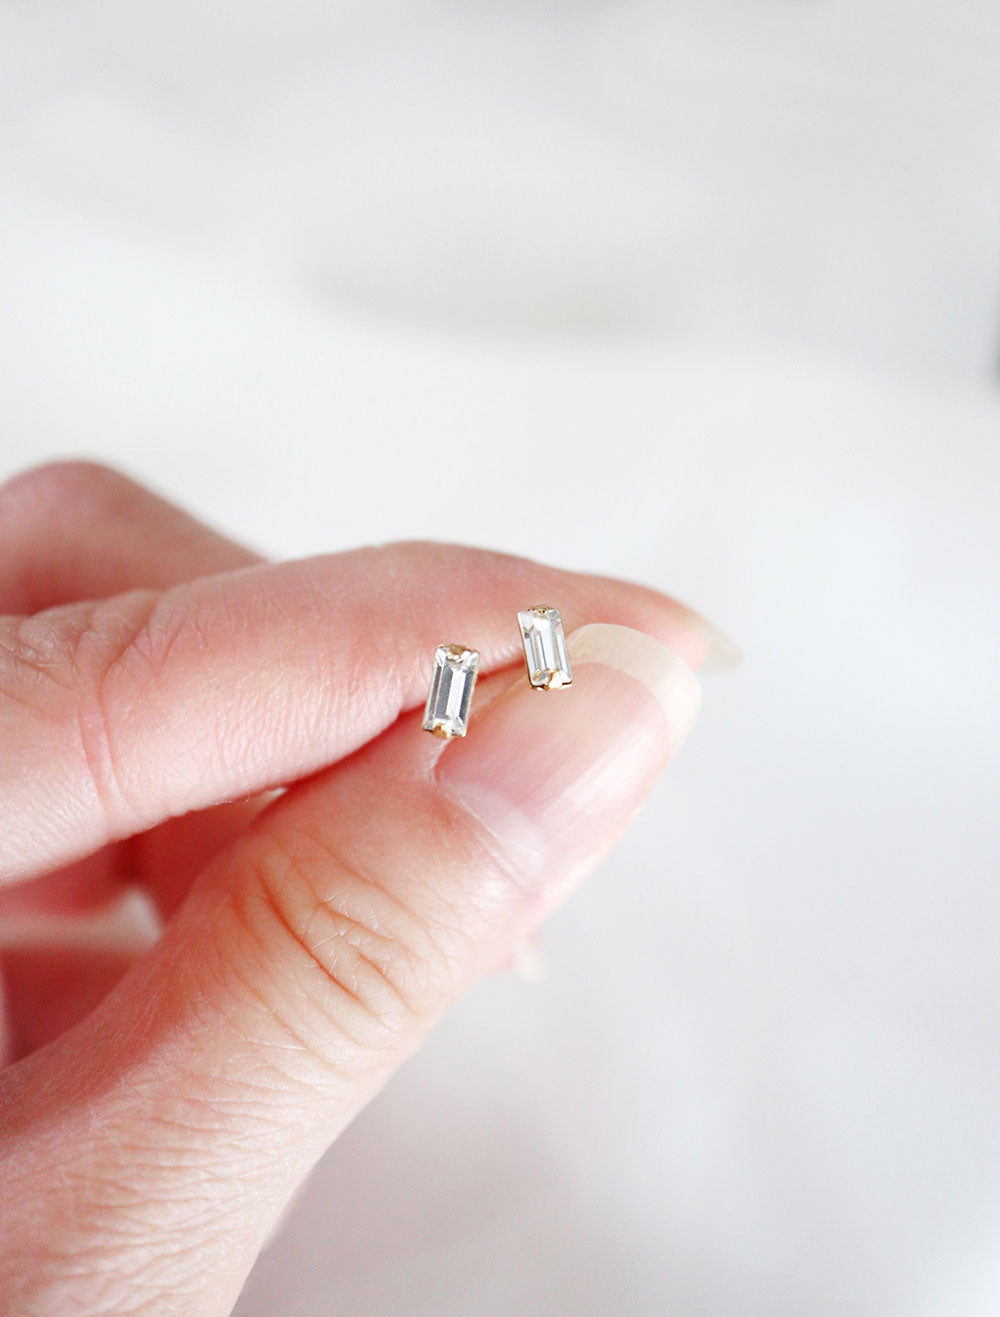 tiny crystal baguette earrings in hand